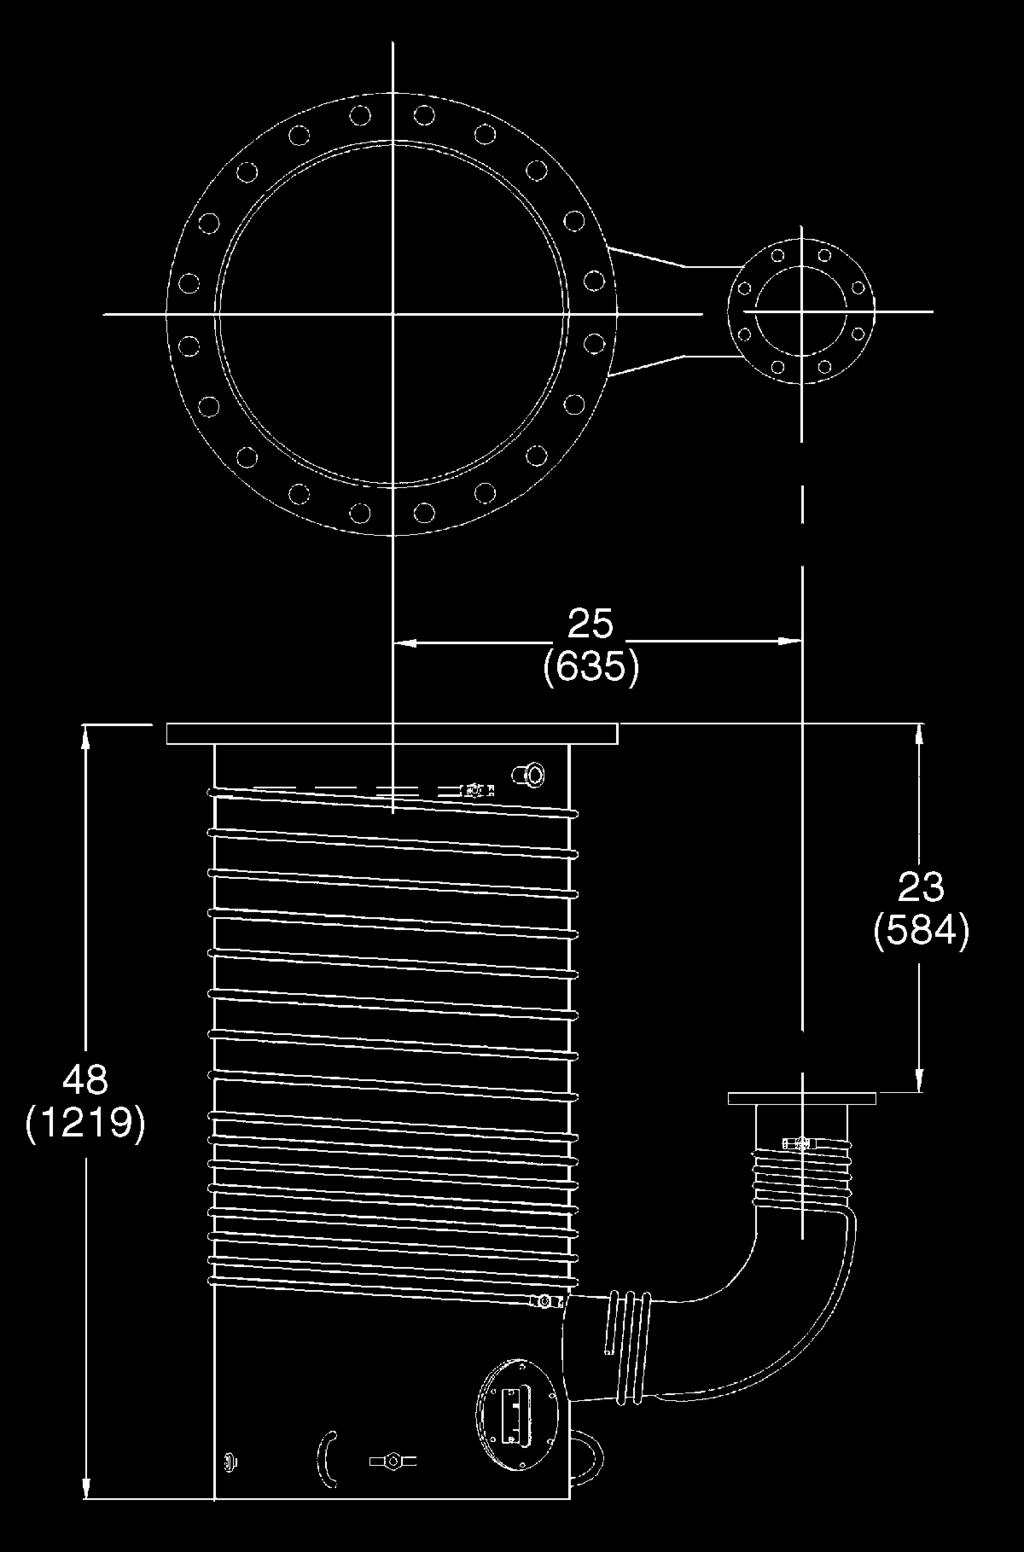 Standard gauge port (NW-25) below inlet flange included Foreline baffle prevents loss of